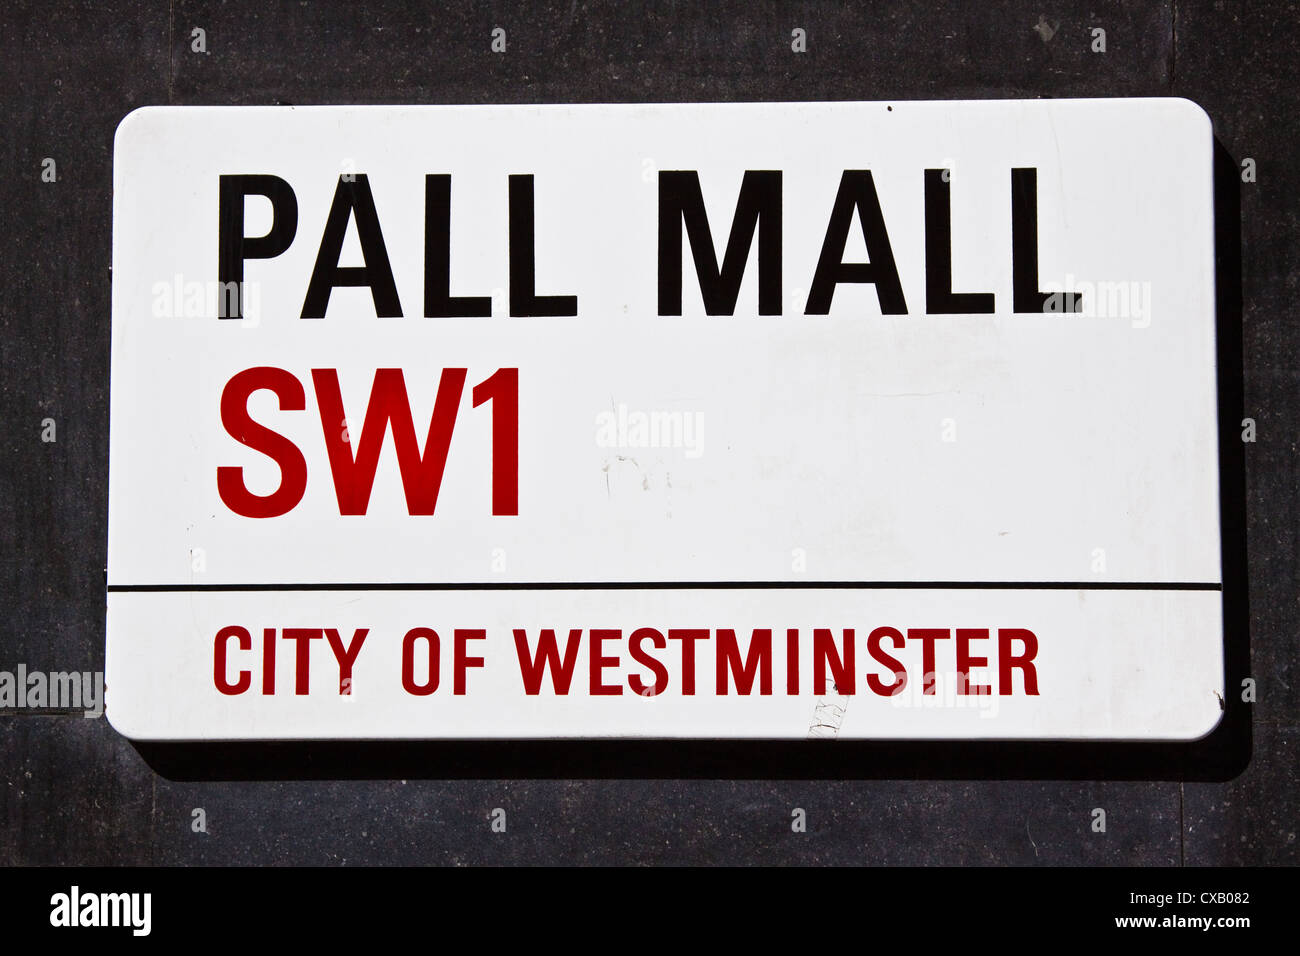 Pall Mall SW1 street sign Stock Photo: 50643490 - Alamy